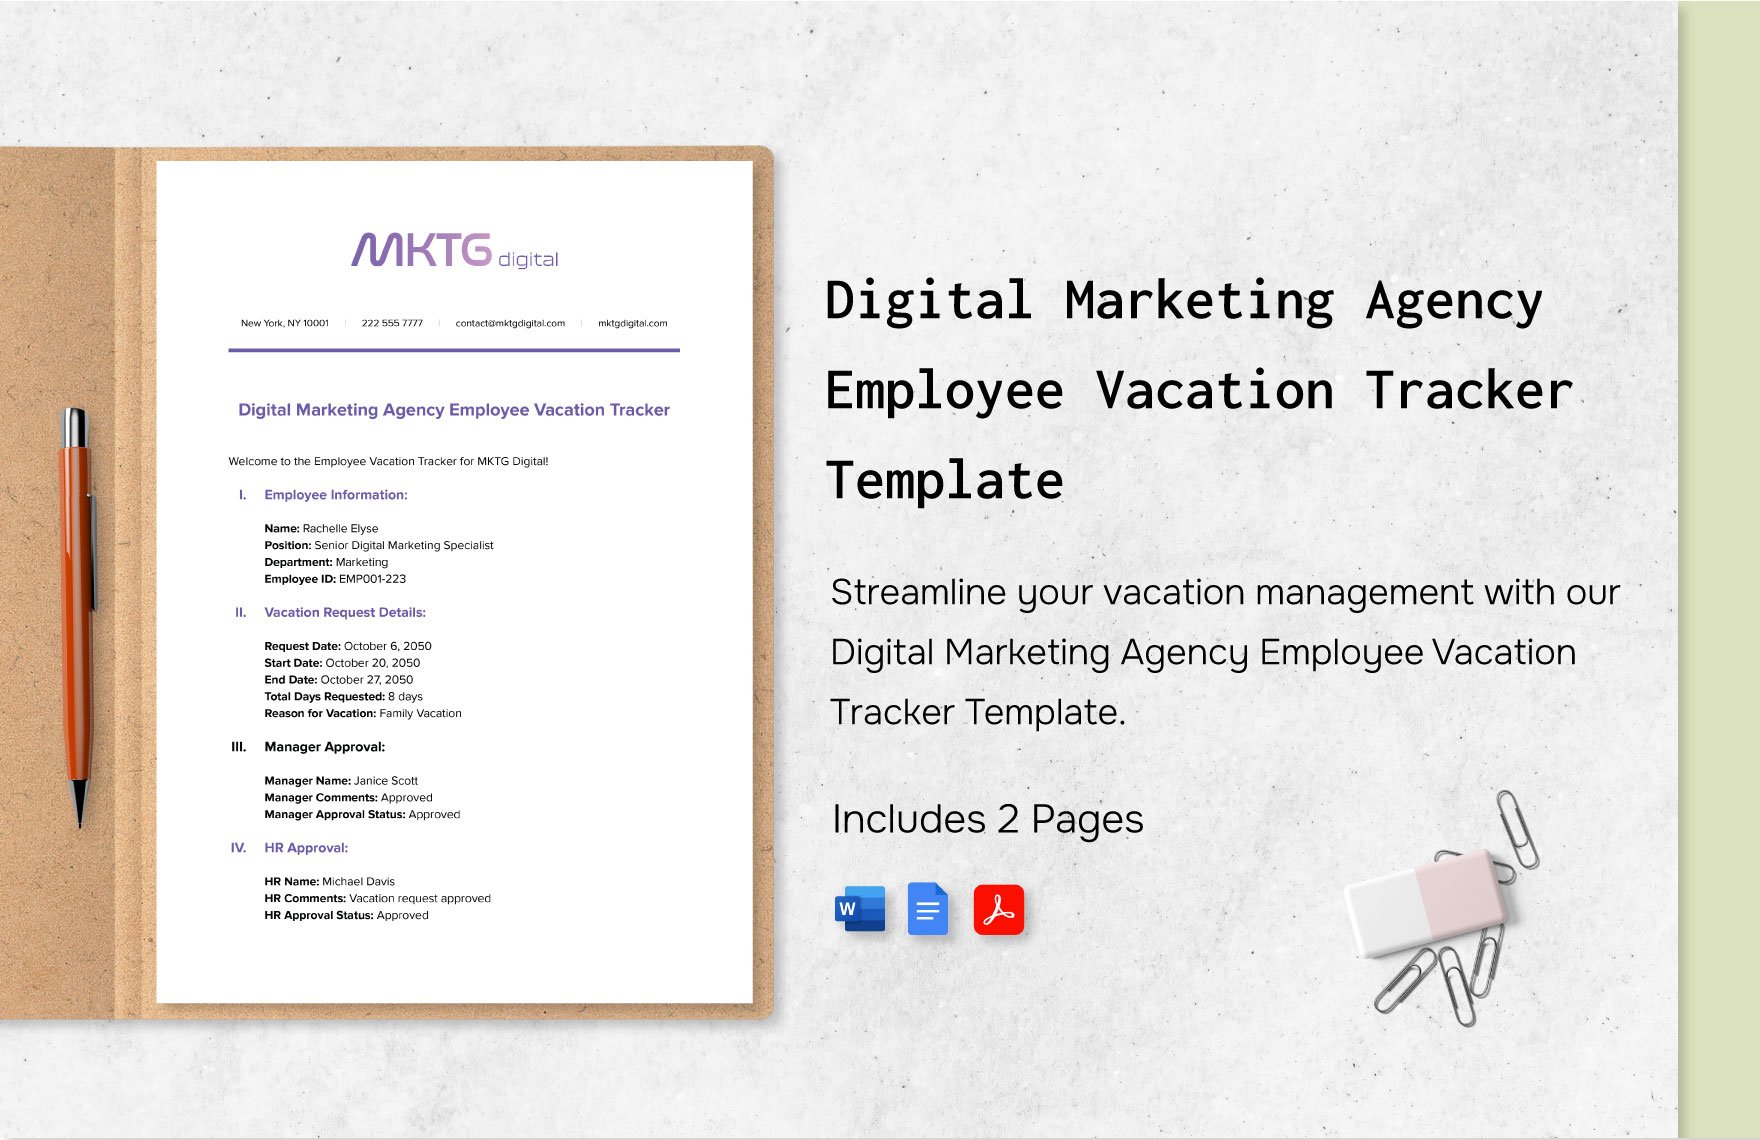 Digital Marketing Agency Employee Vacation Tracker Template in Word, Google Docs, PDF